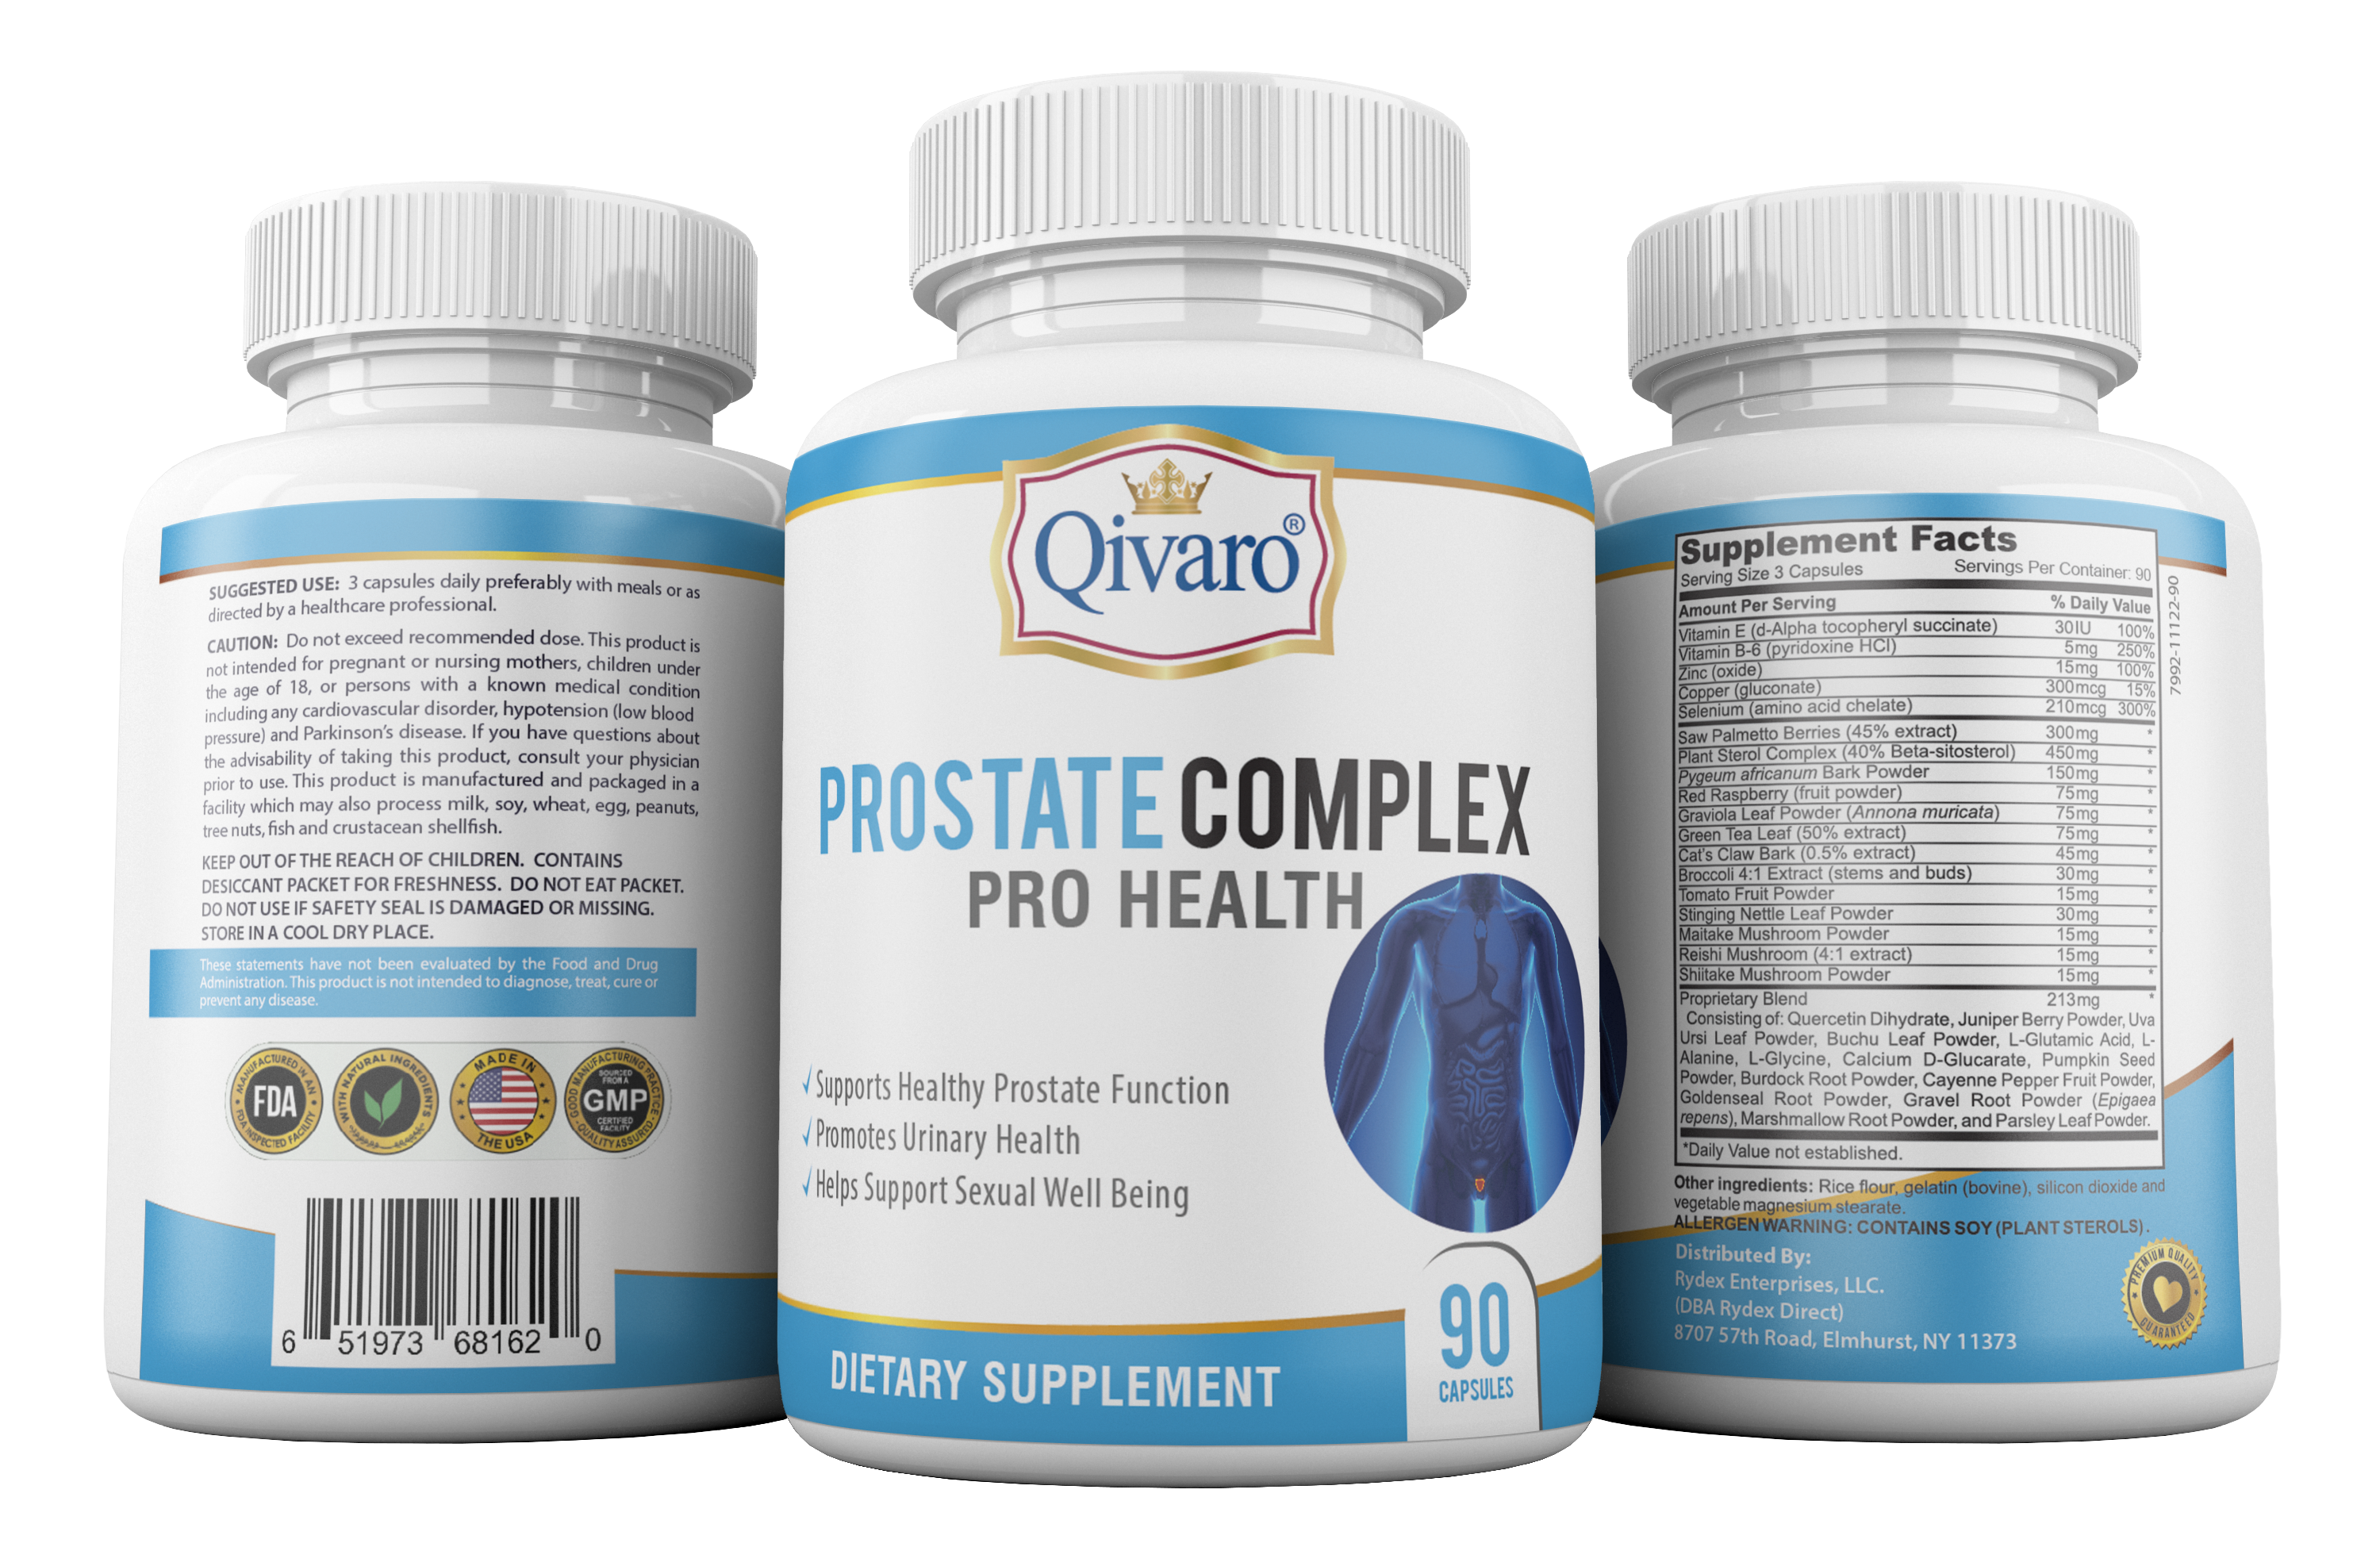 QIH45: Prostate Complex Pro Health by Qivaro